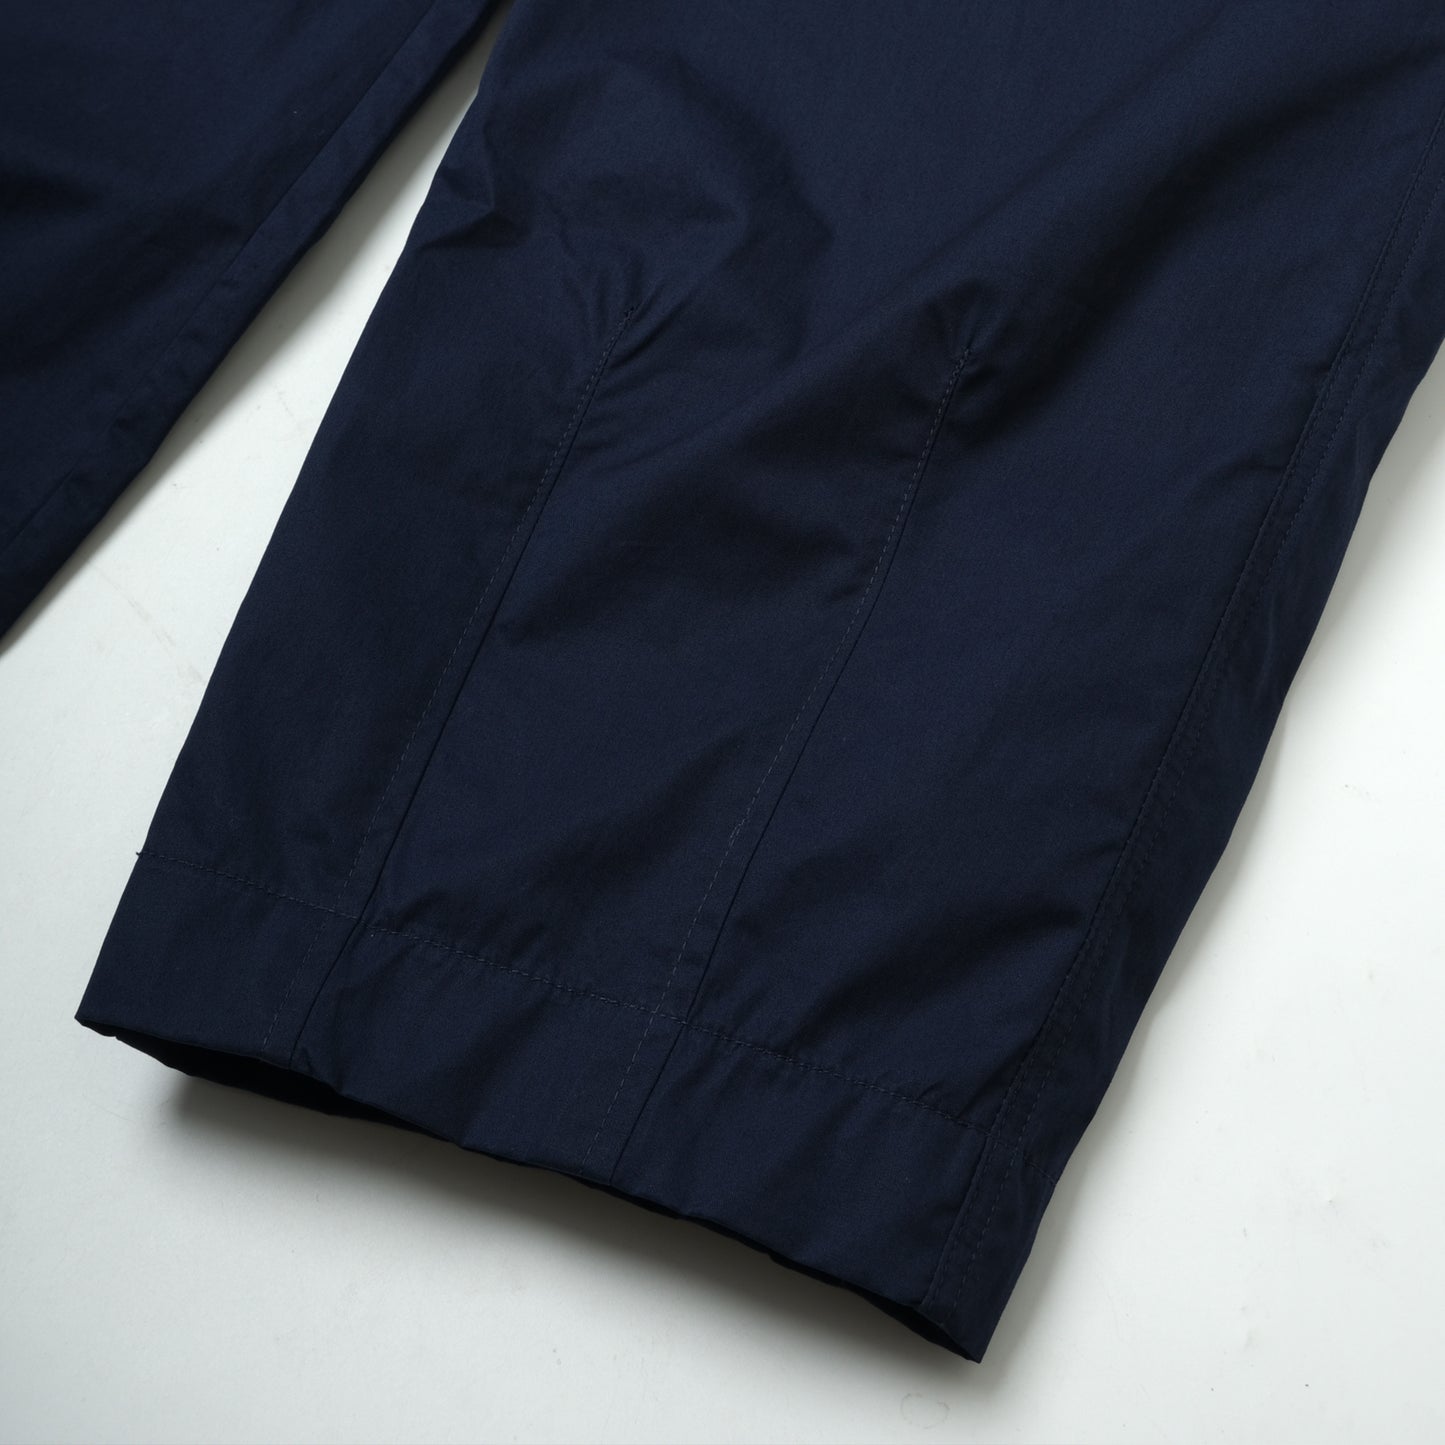 Cargo Pants / Cotton - Navy